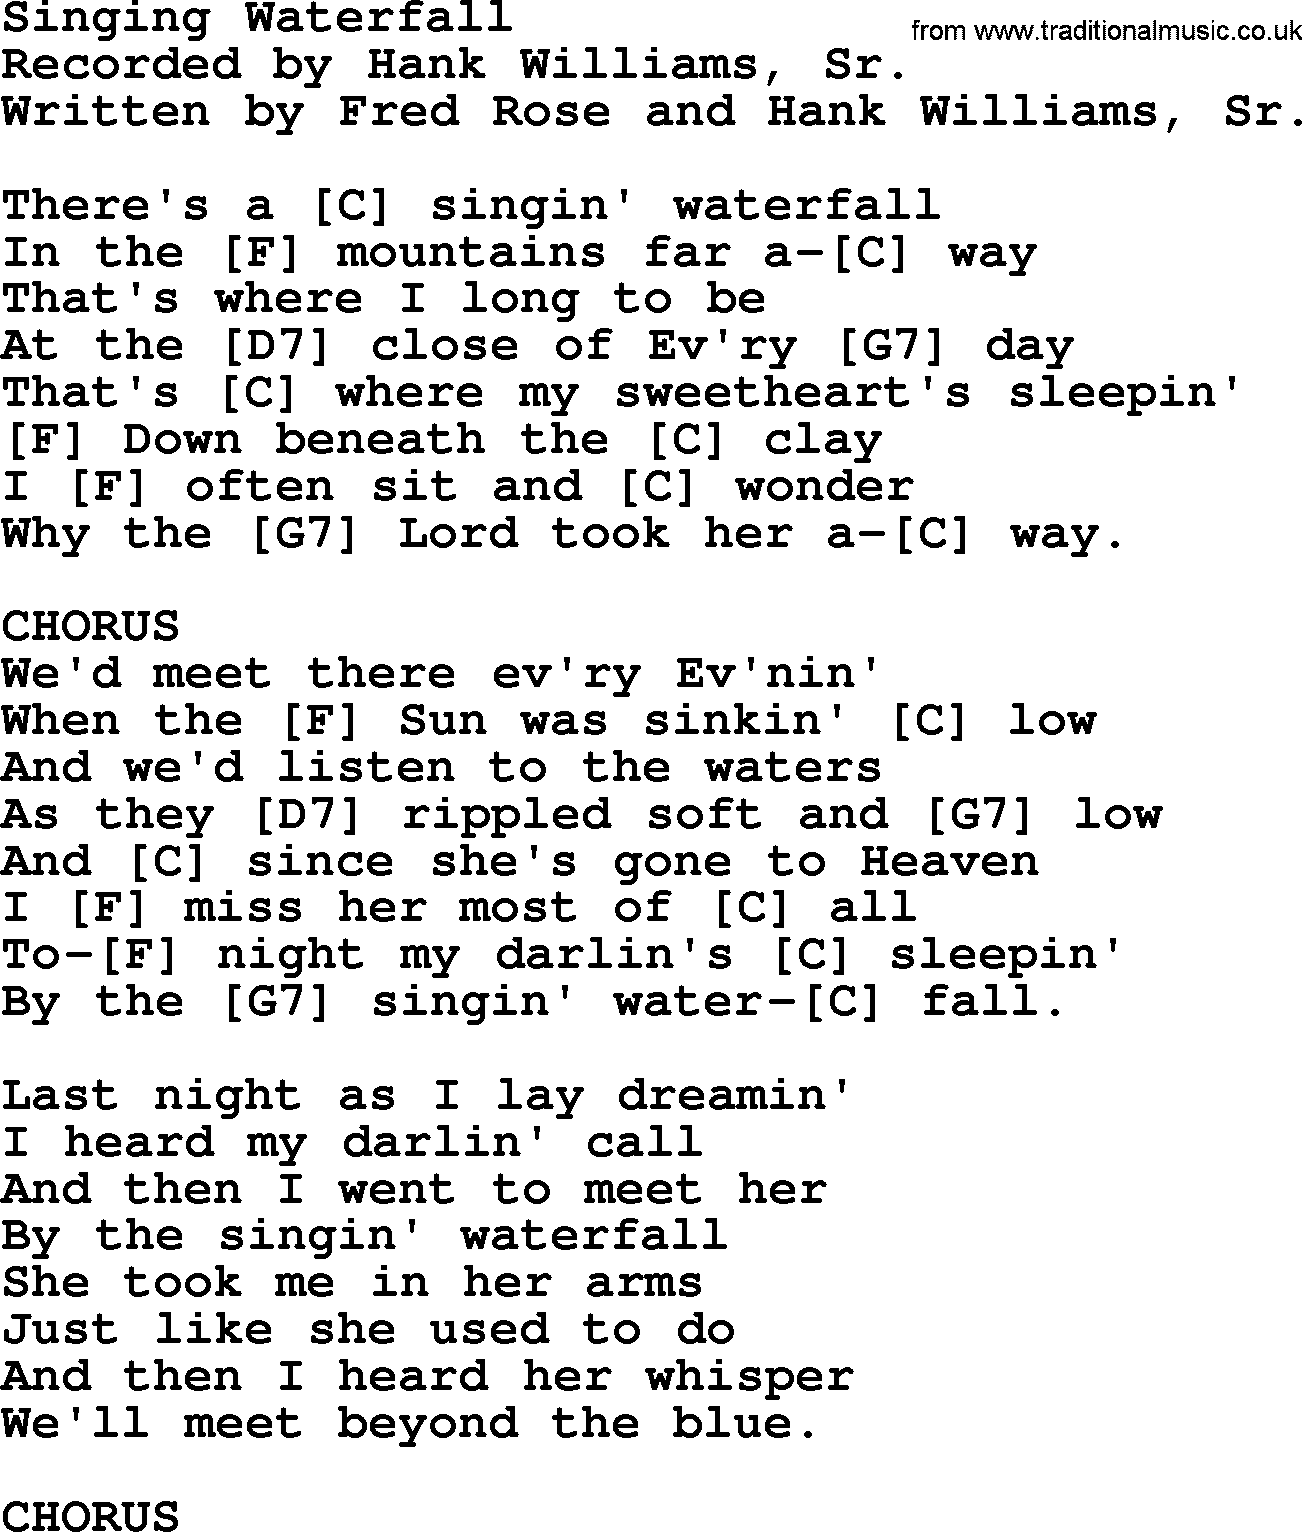 Hank Williams song Singing Waterfall, lyrics and chords